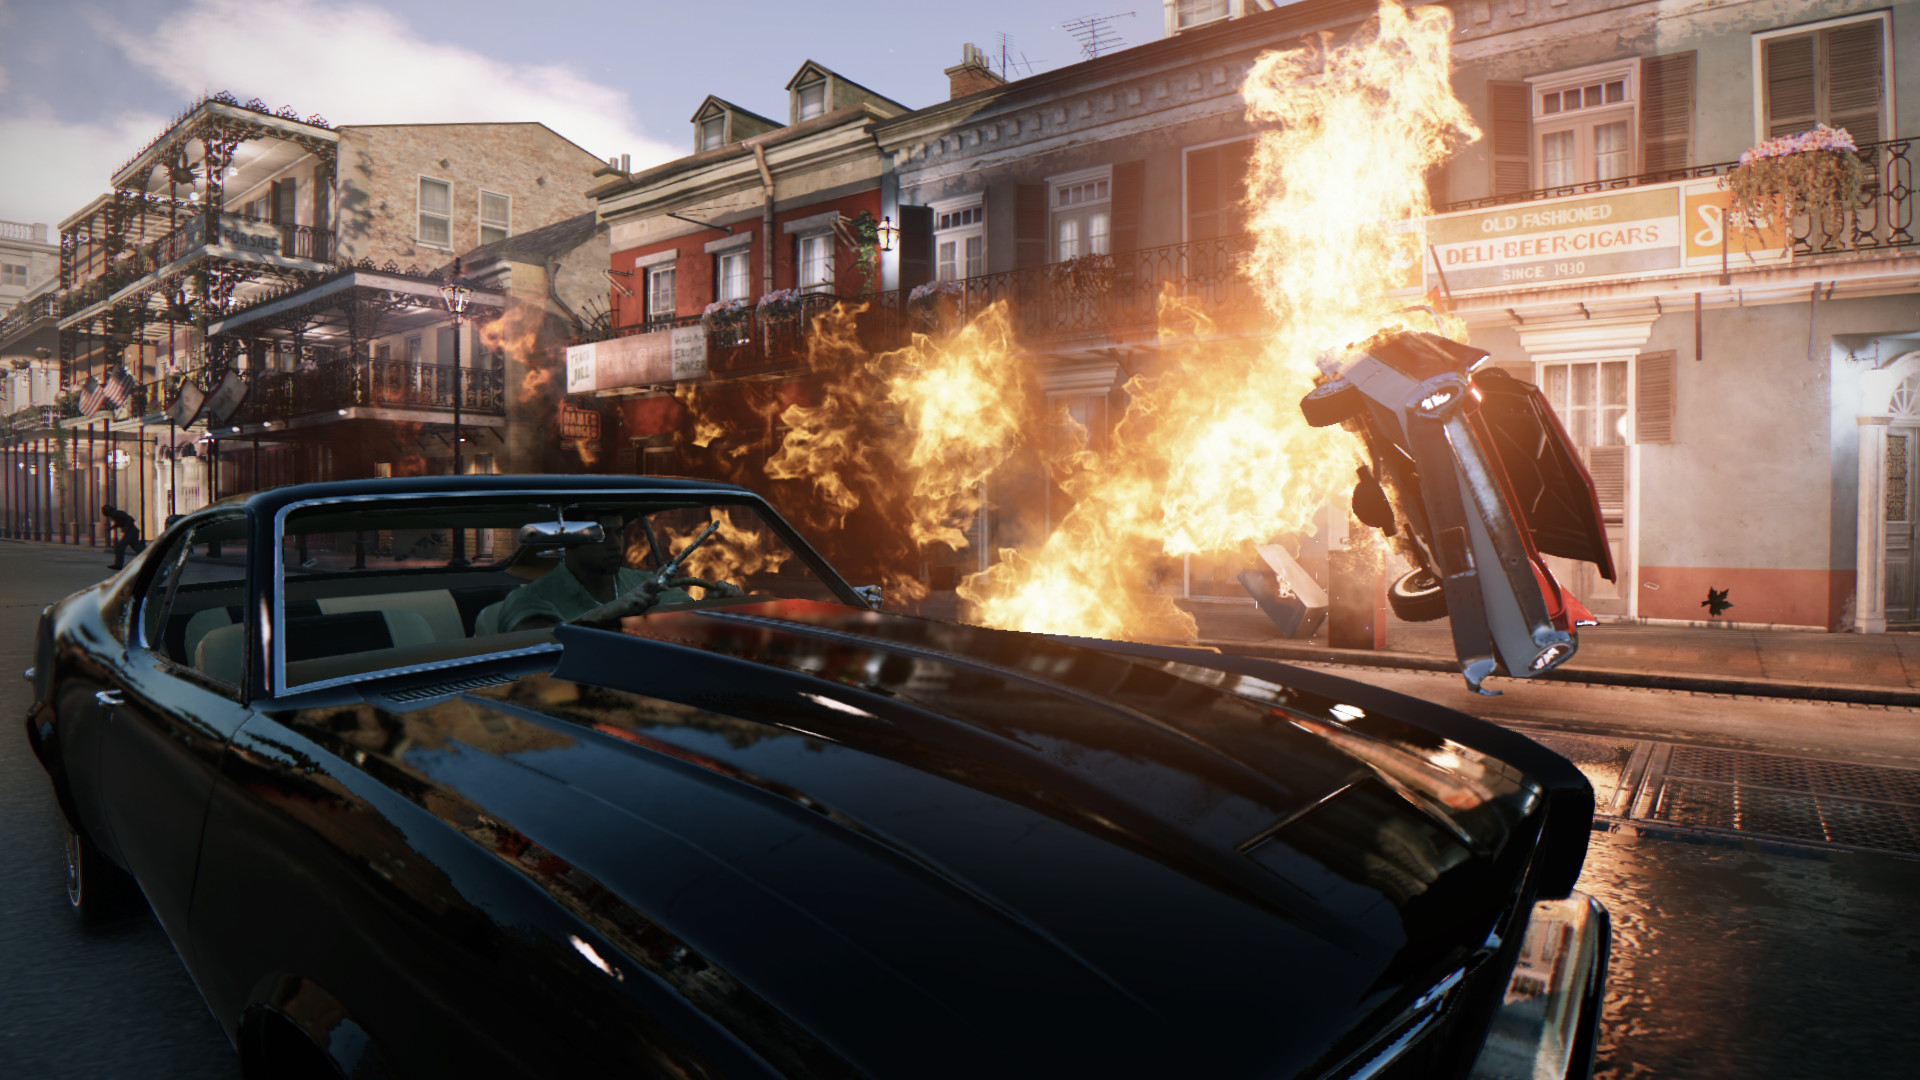 Mafia III: Definitive Edition on Steam